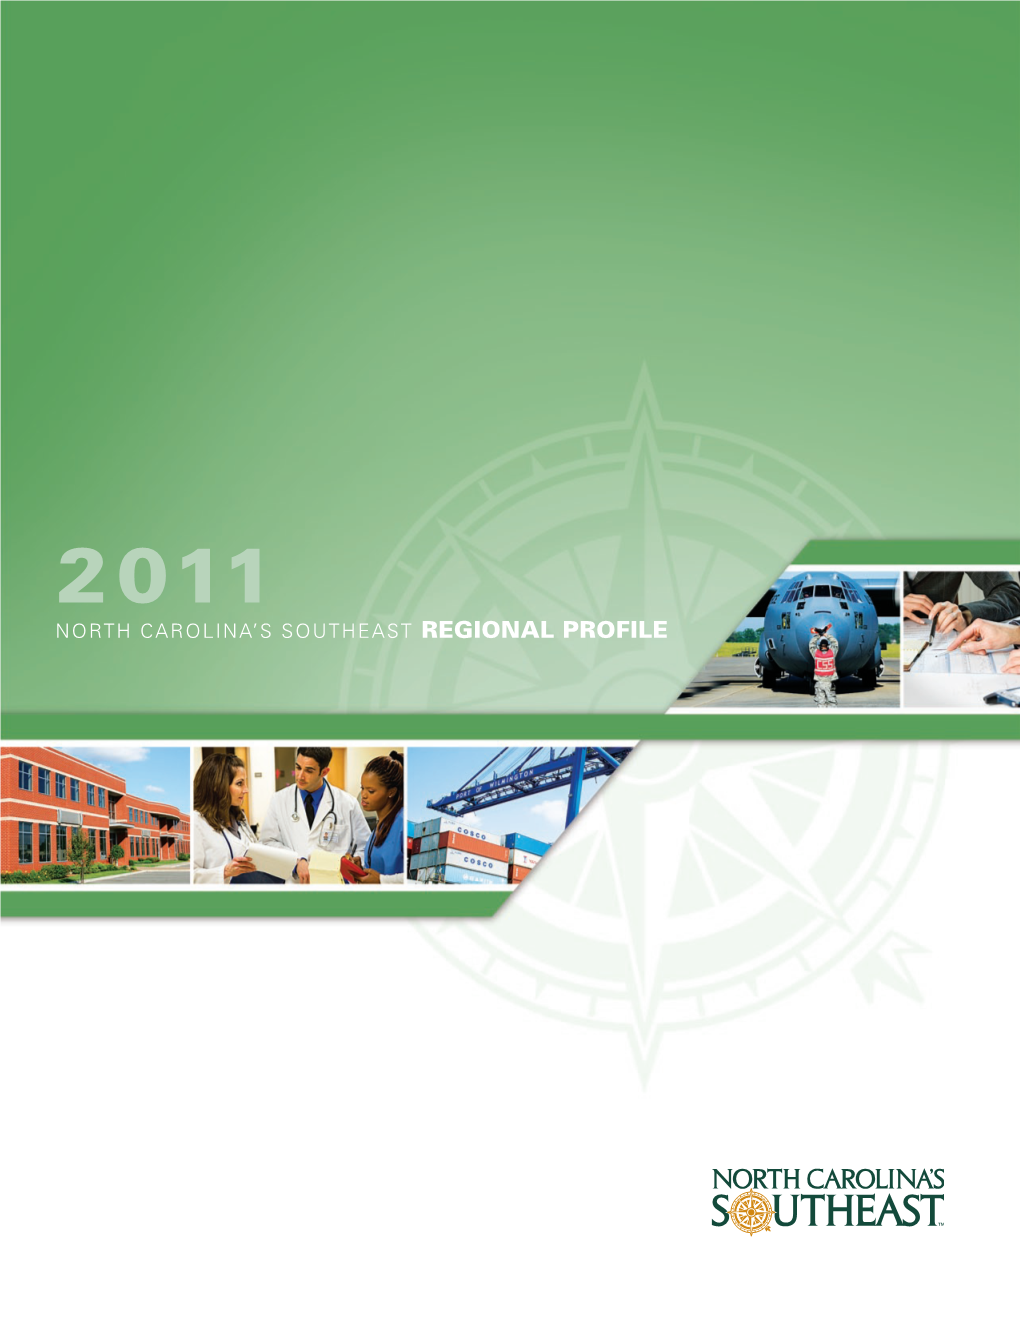 North Carolina's Southeast 2011 Regional Economic Profile